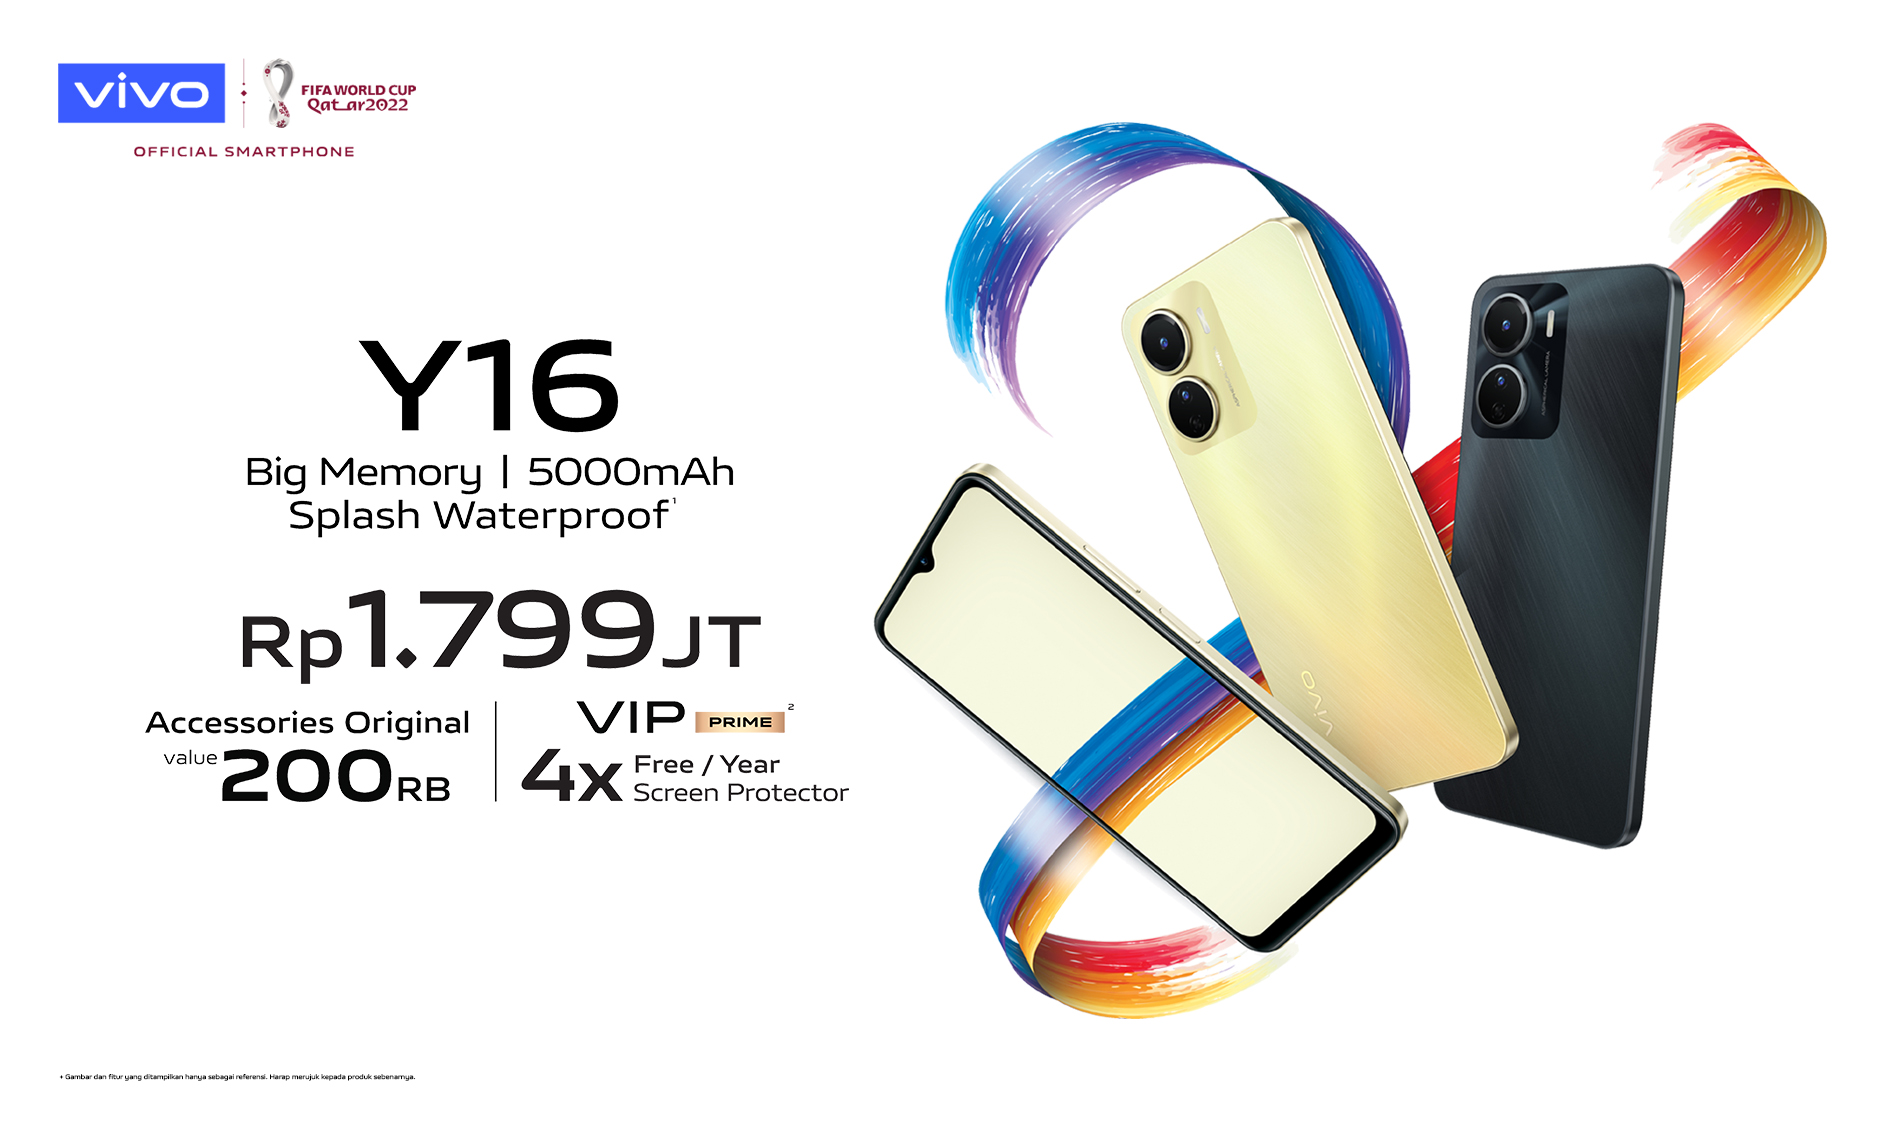 Memperkenalkan Smartphone Terbaru yang Stylish dari vivo Y16